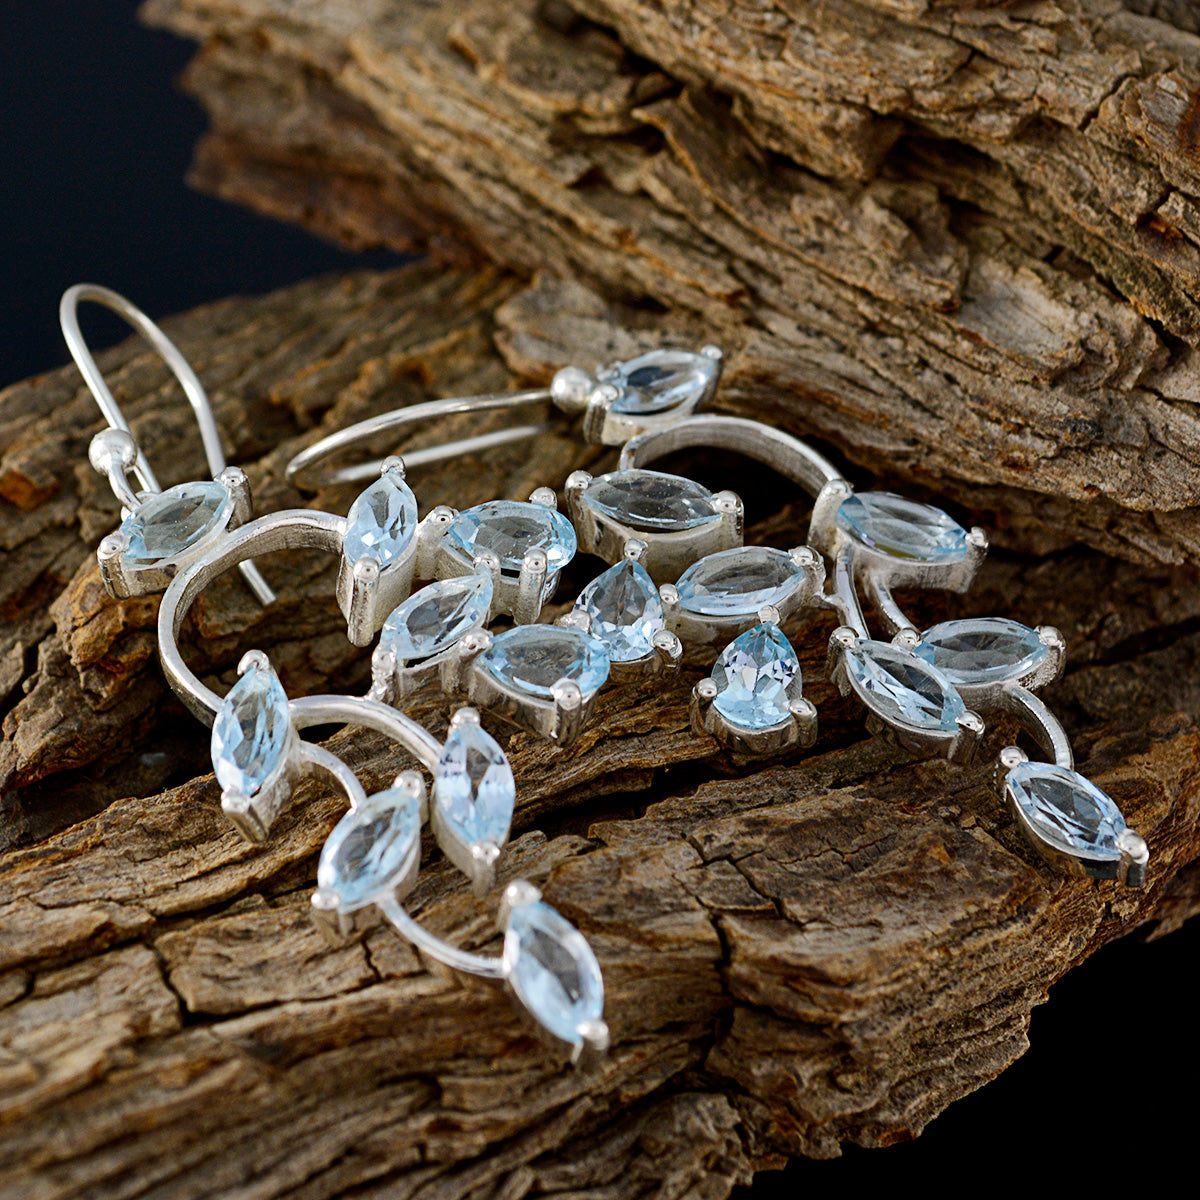 Riyo Real Gemstones Marquise Faceted Blue Topaz Silver Earrings black Friday gift